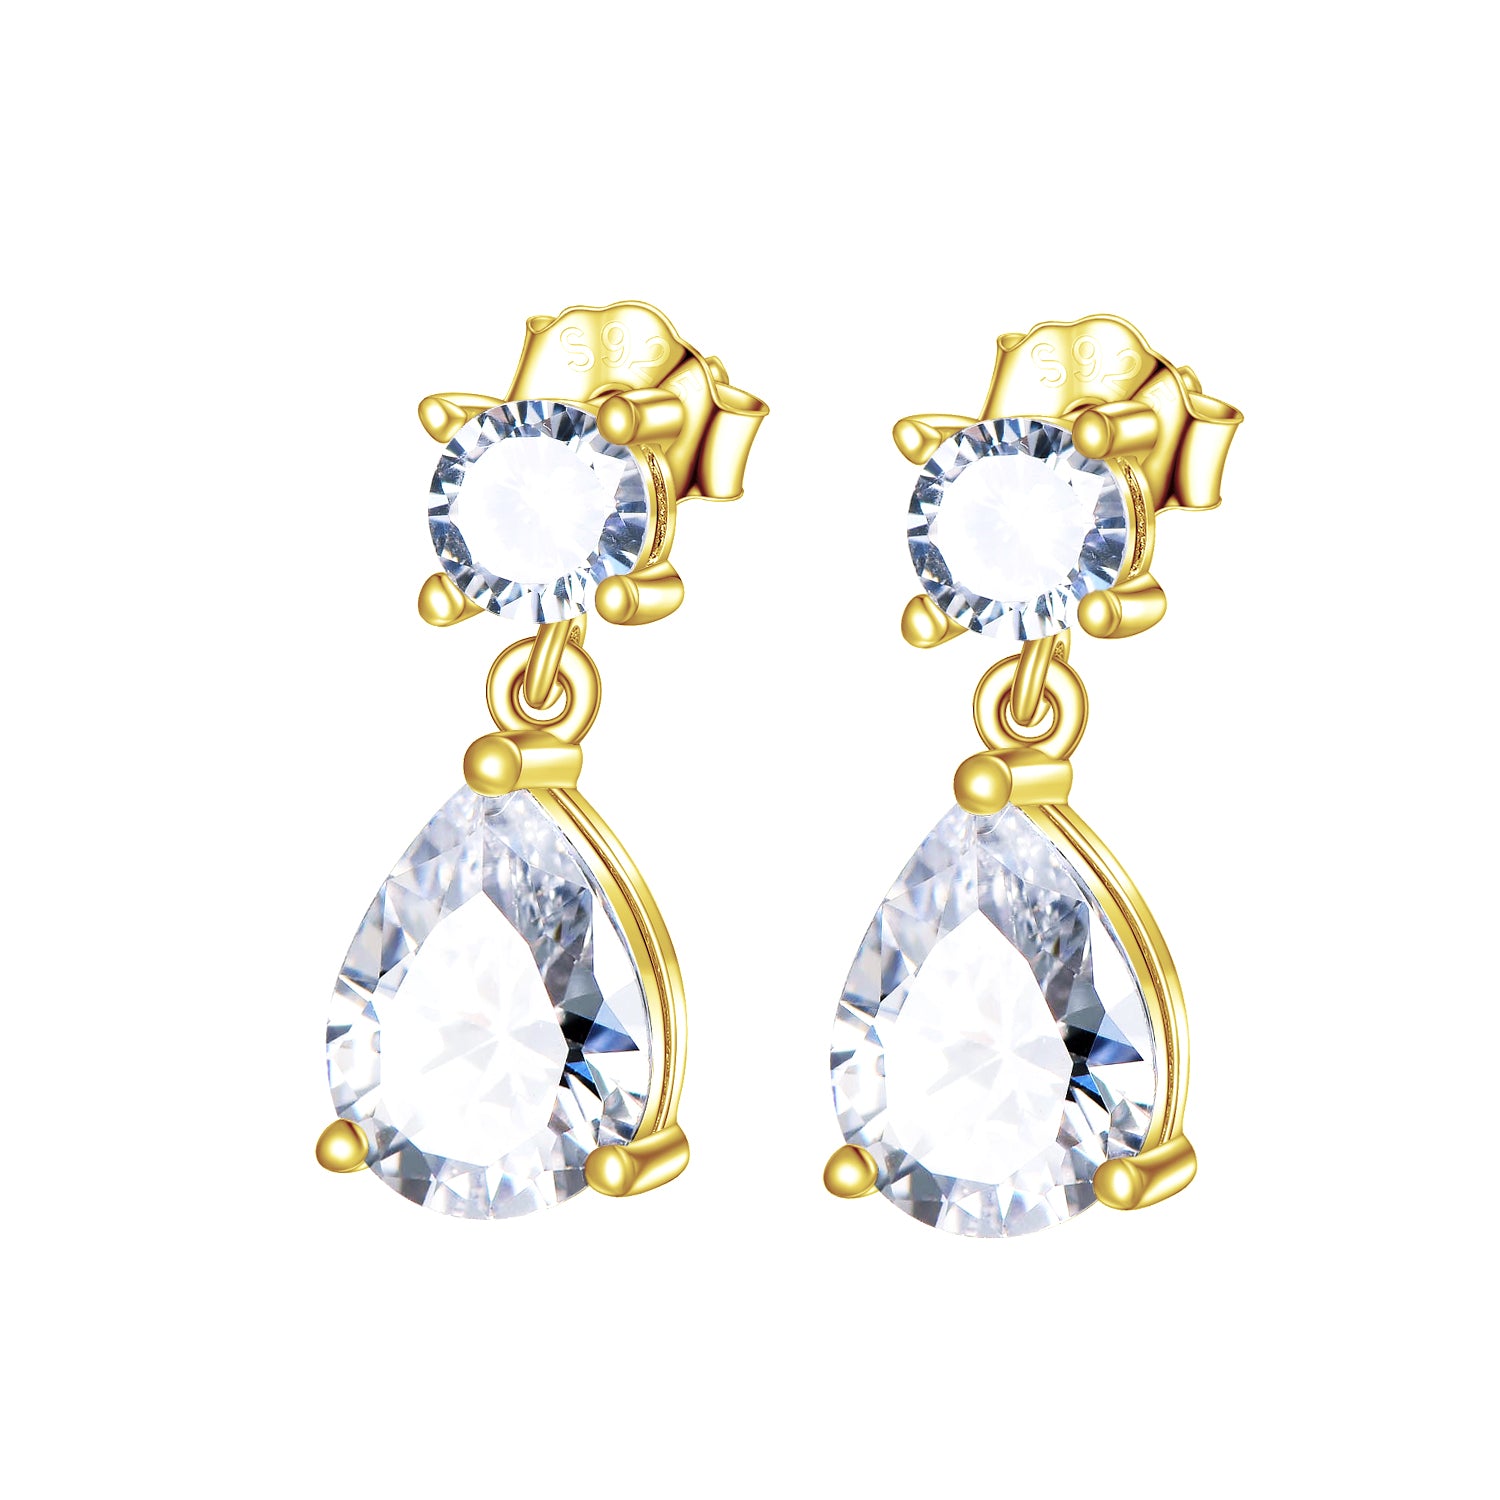 925 Silver High Quality Elegant Ladies Gold Plating Water Drop Earrings